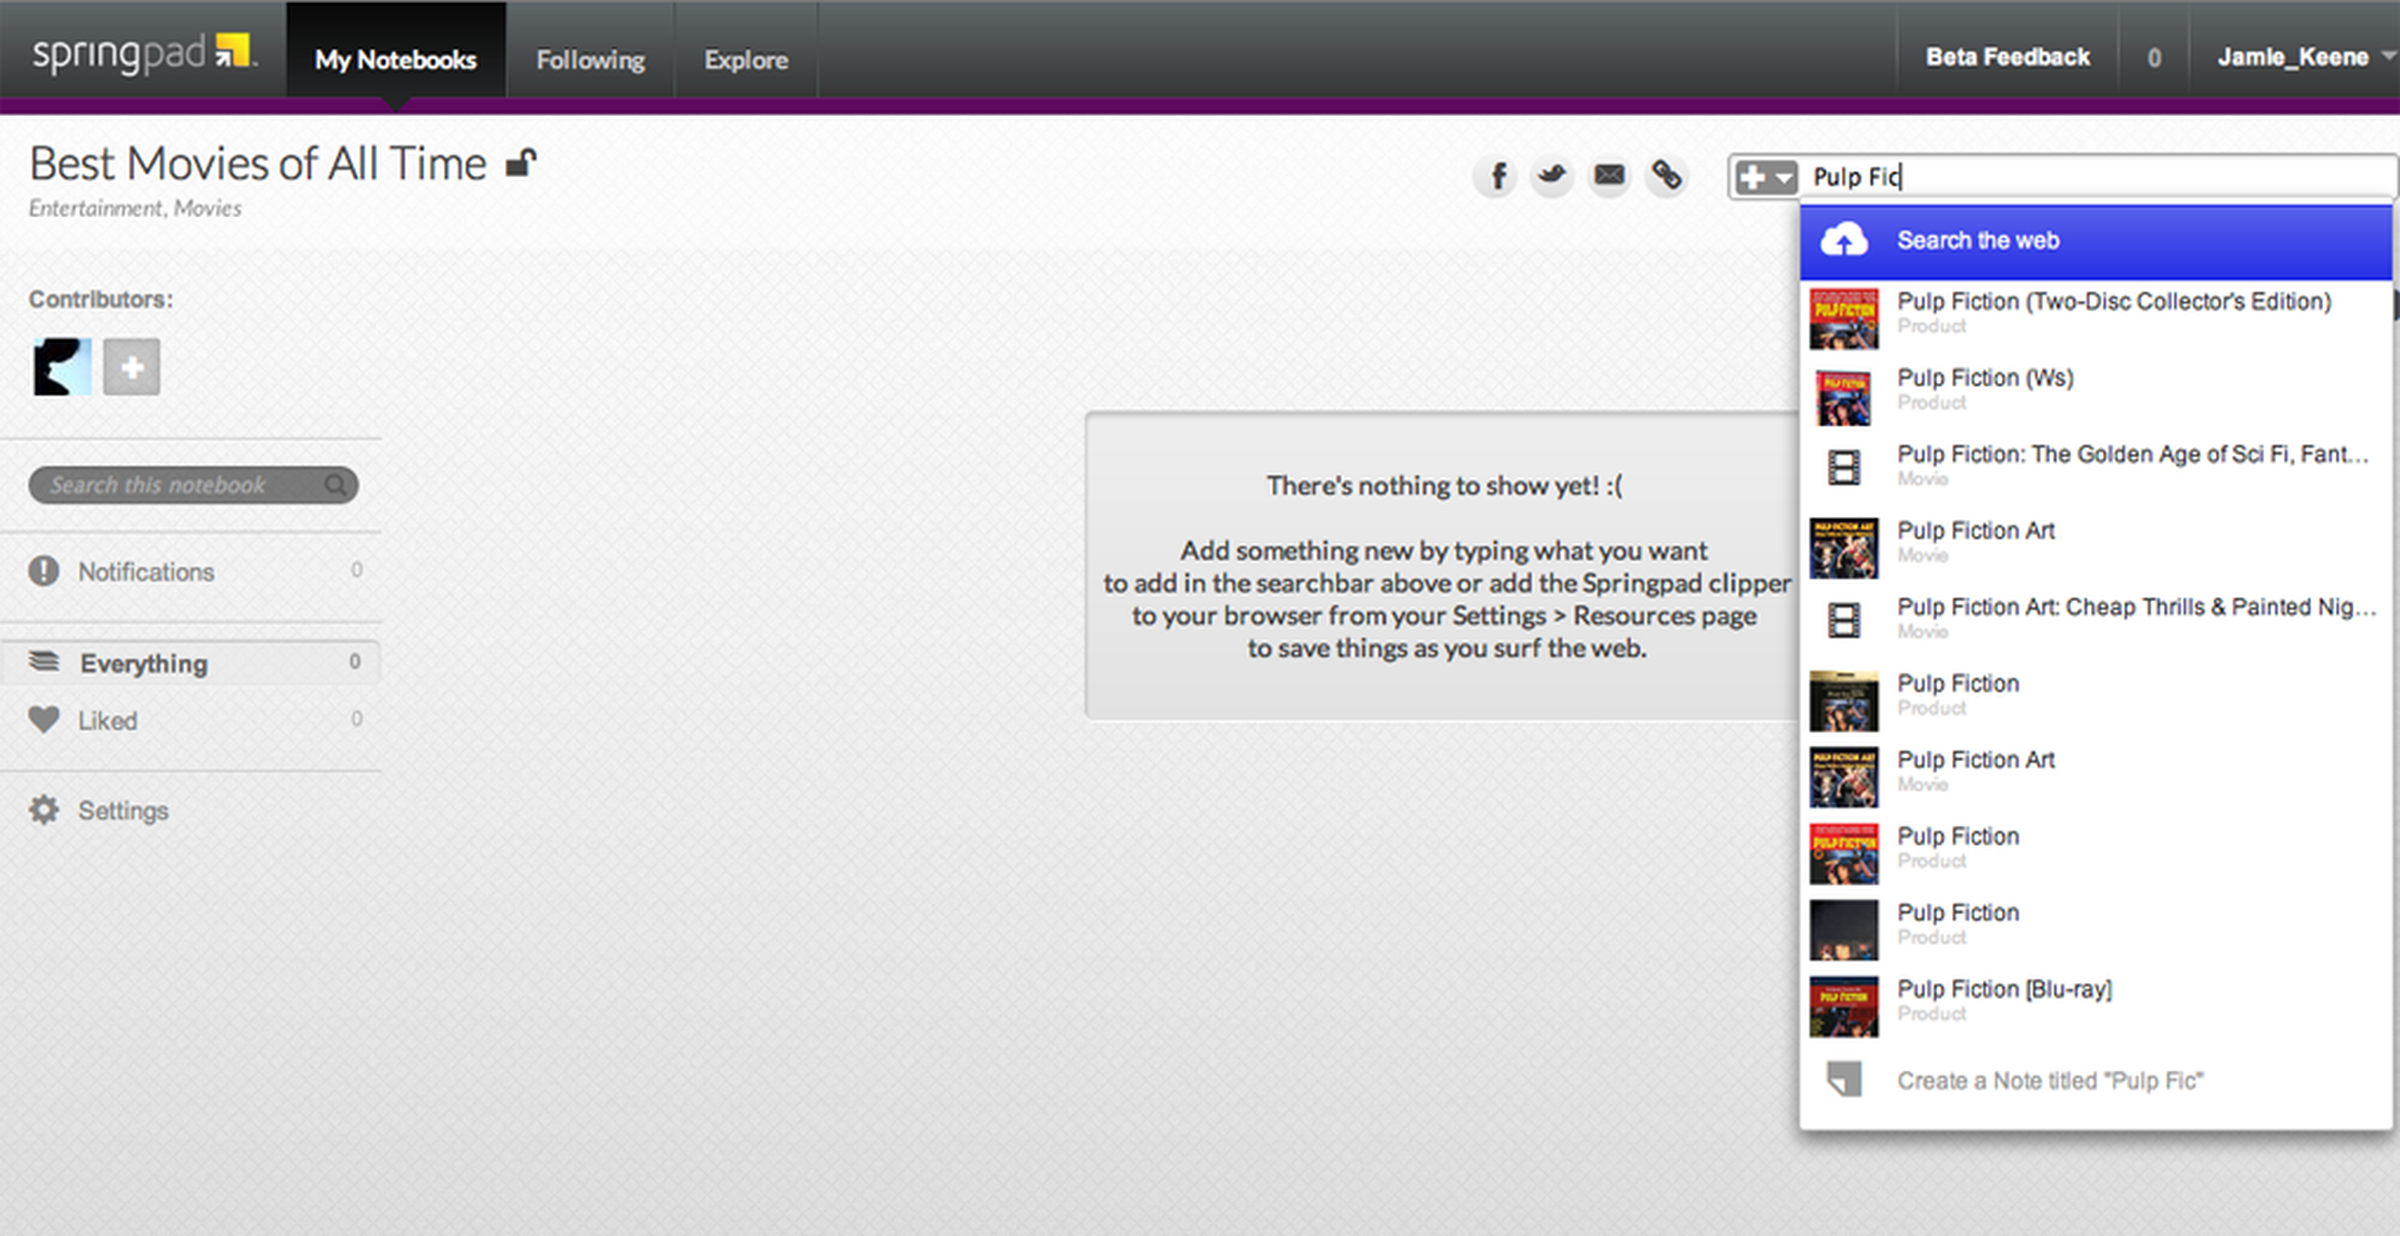 Springpad 3.0 web interface screenshots